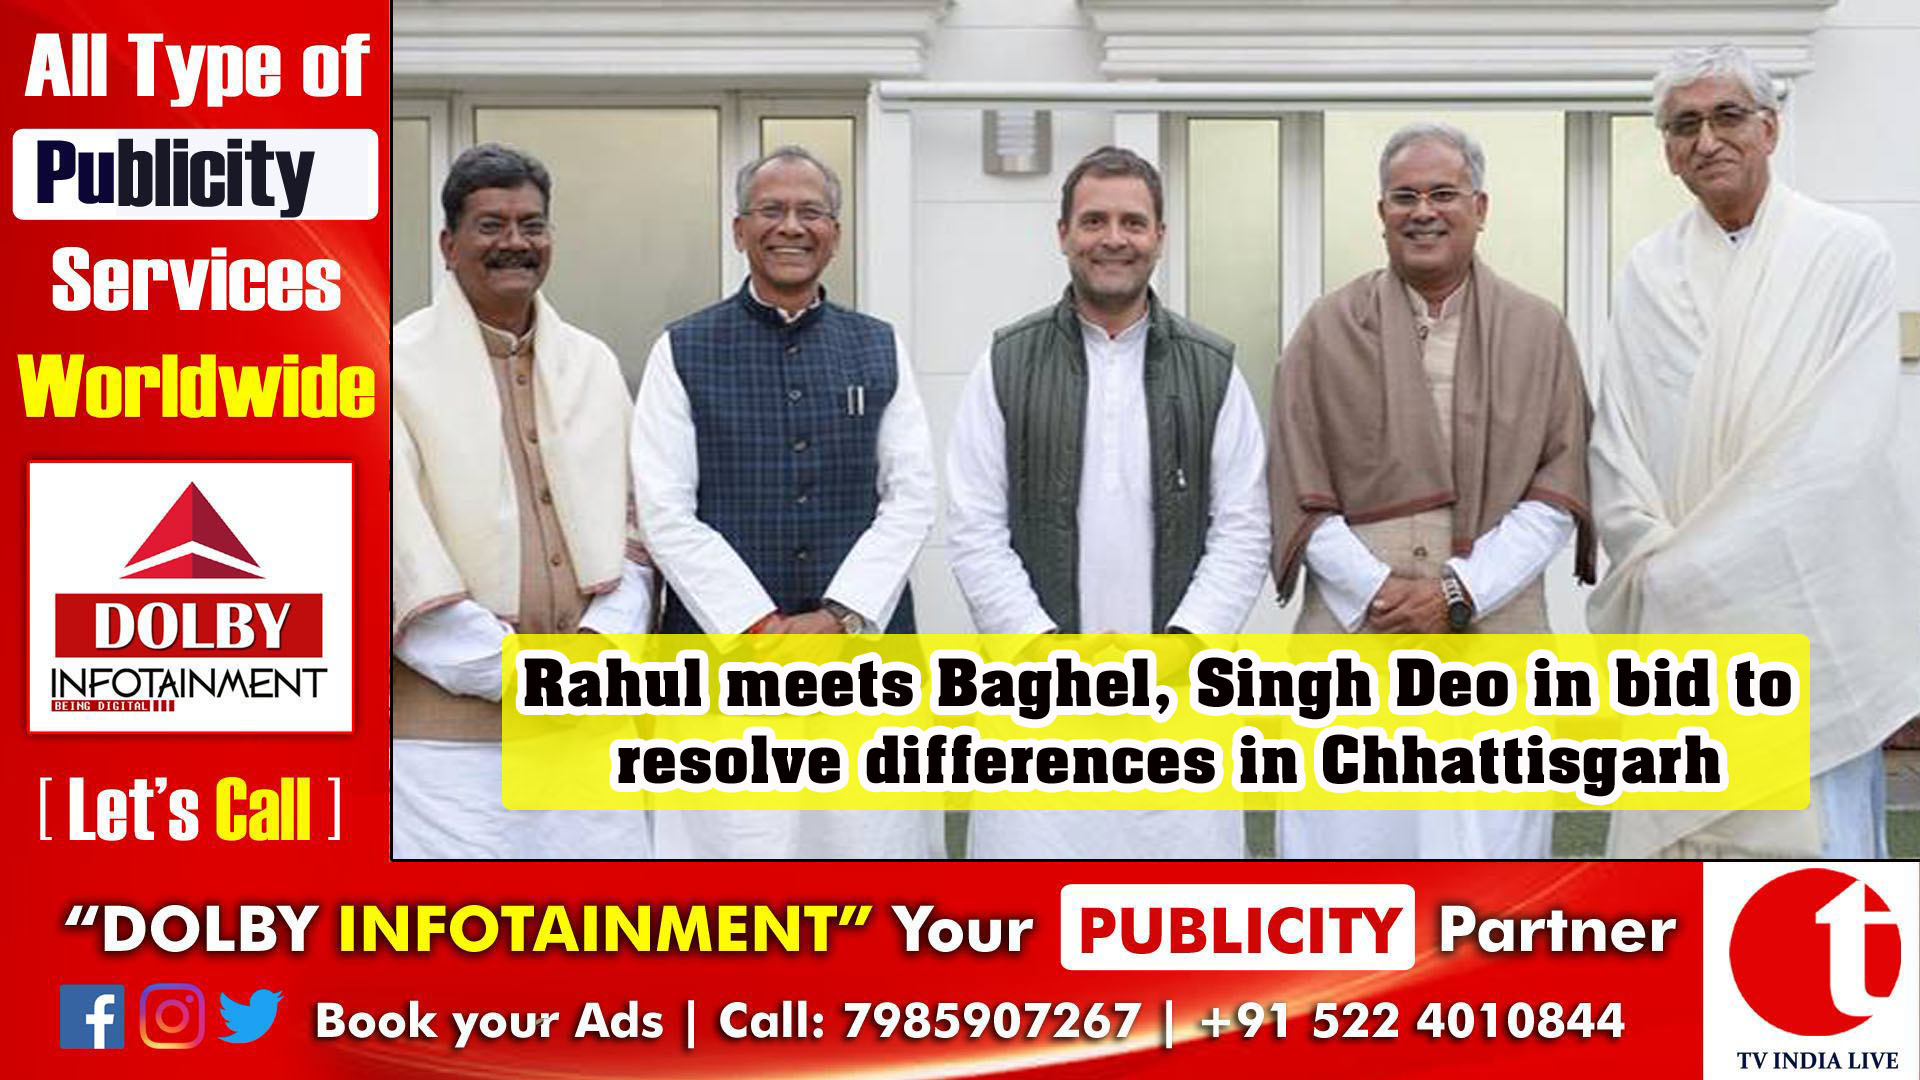 Rahul meets Baghel, Singh Deo in bid to resolve differences in Chhattisgarh